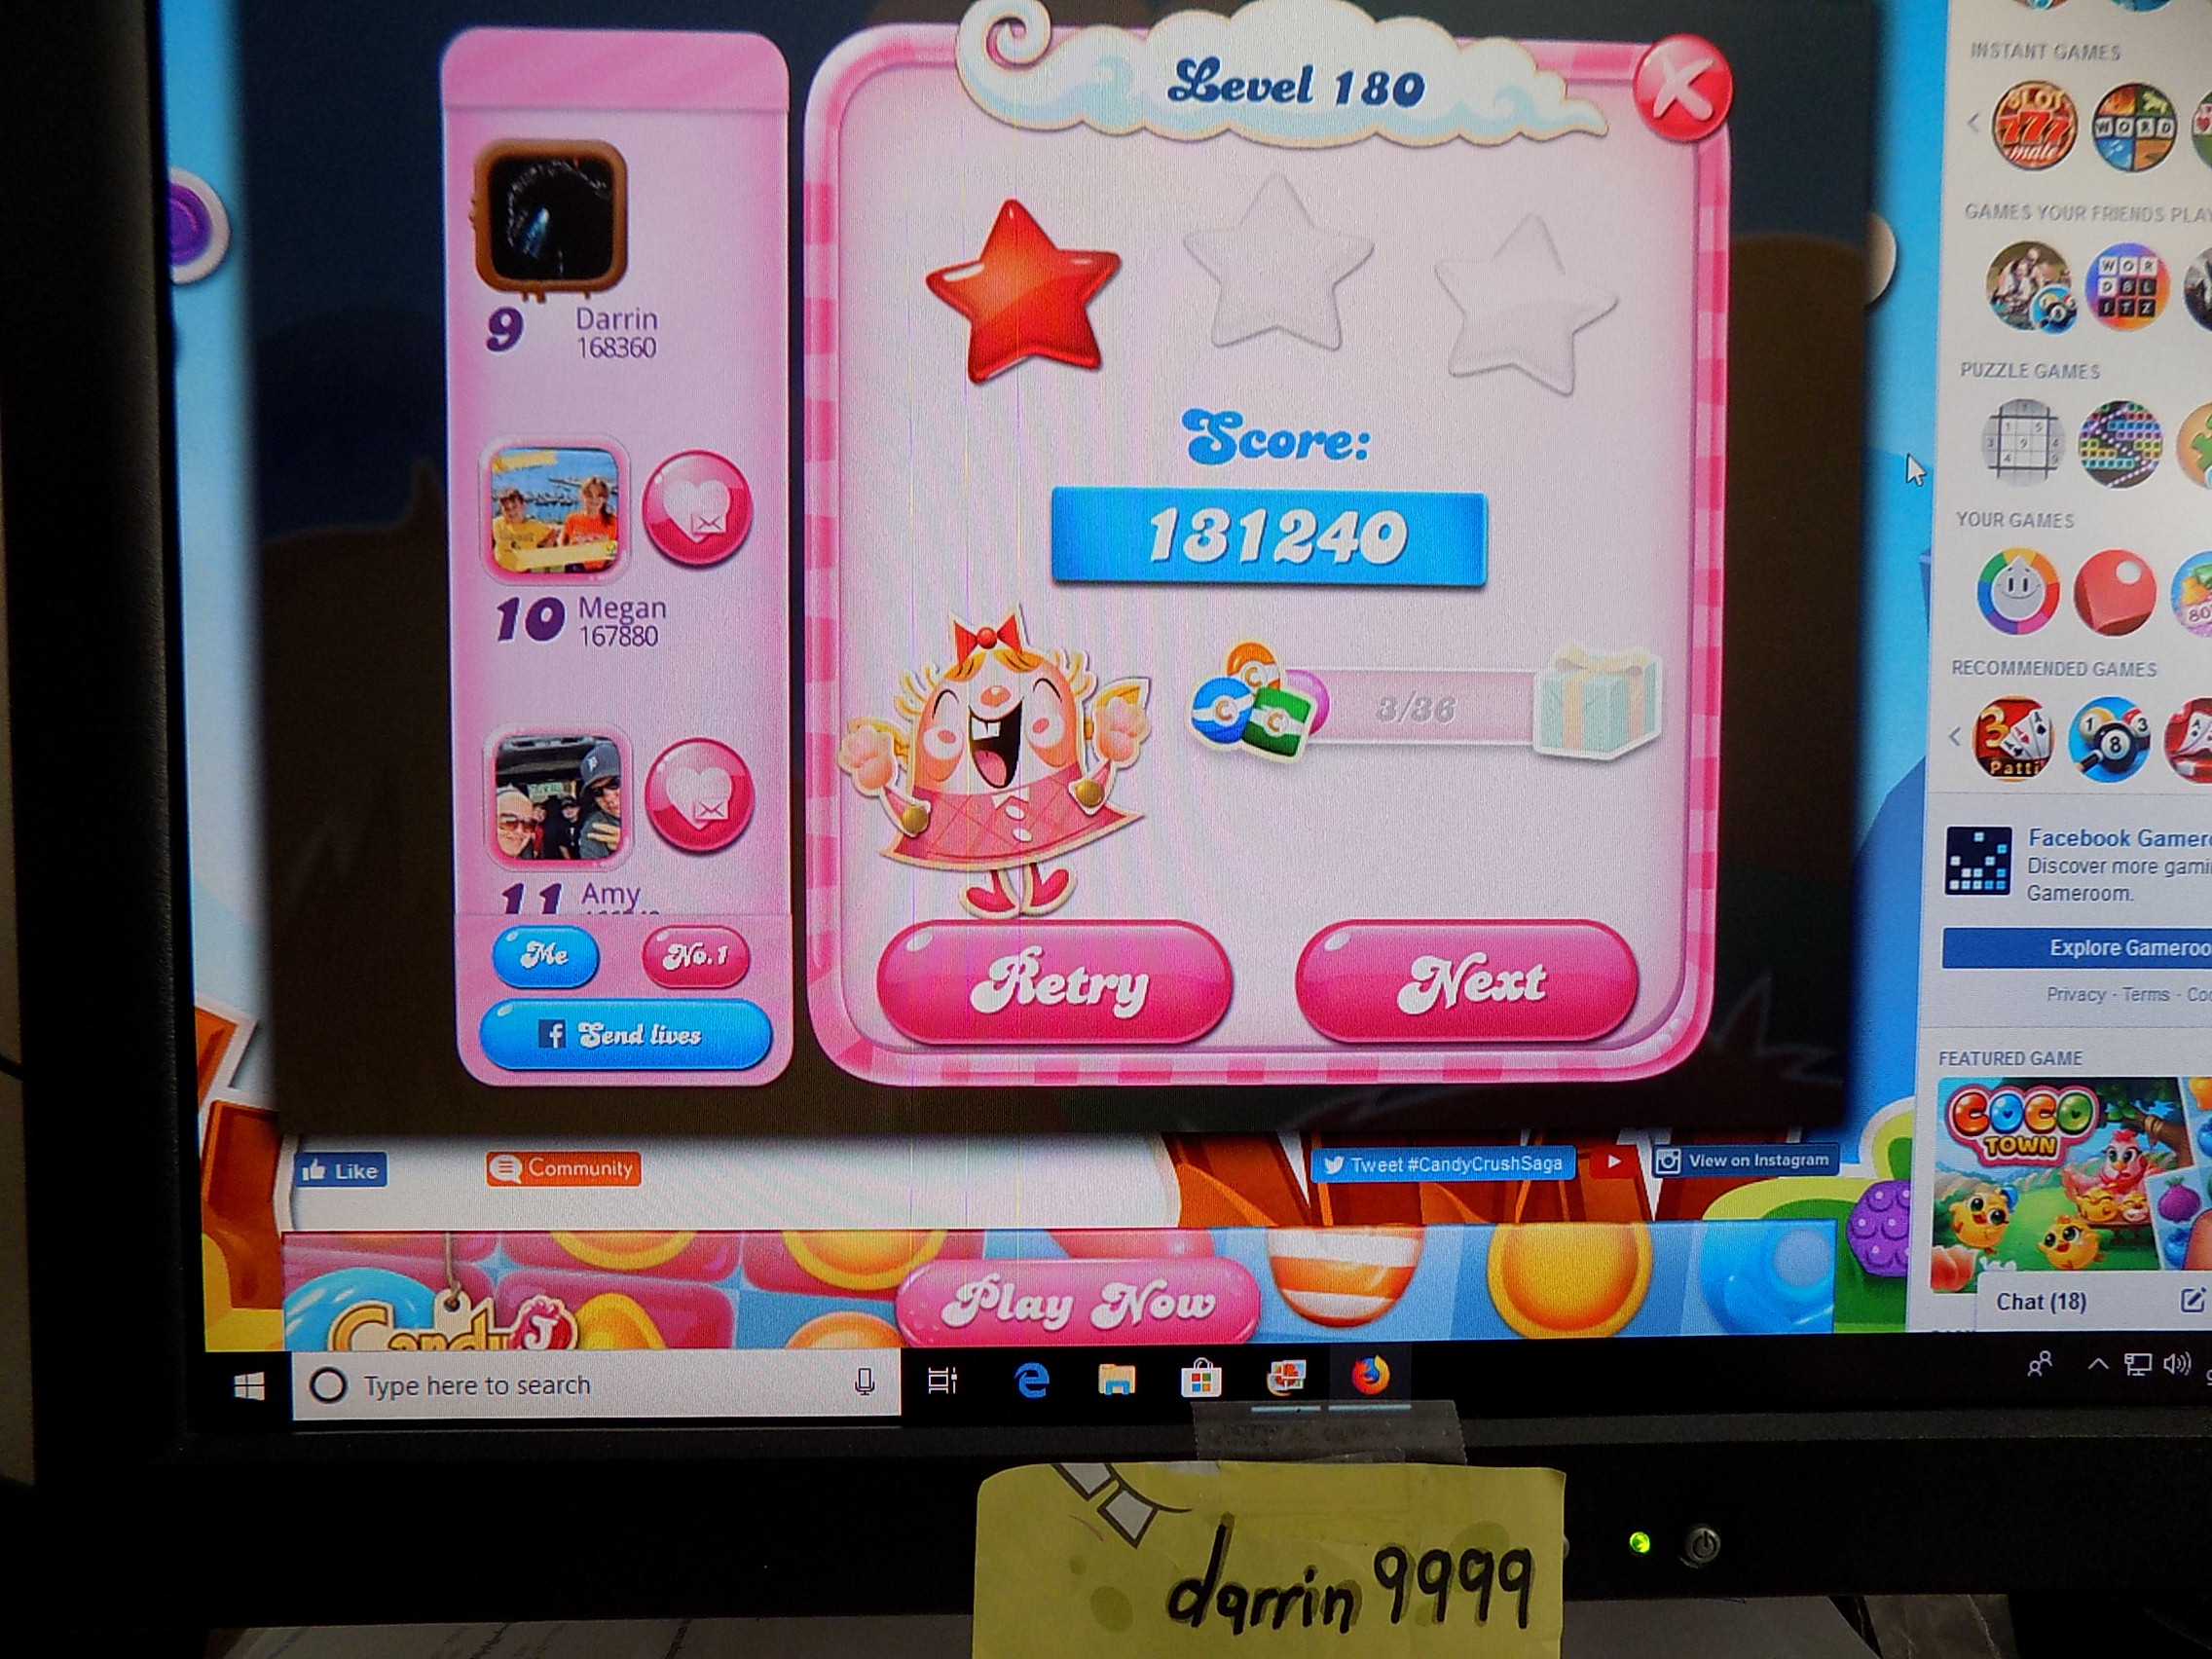 Candy Crush Saga: Level 180 131,240 points